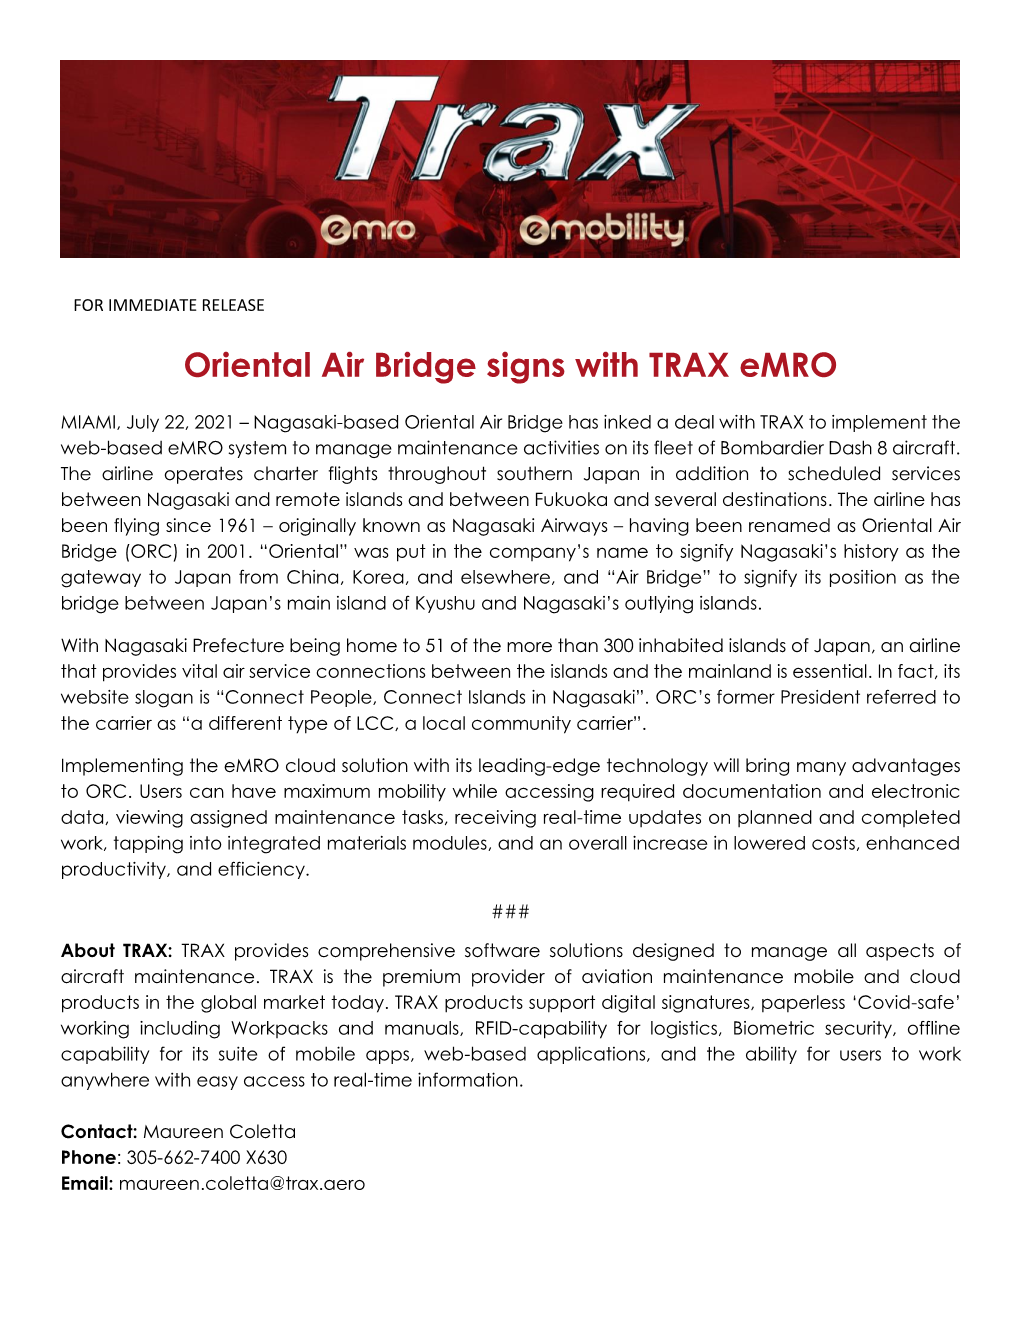 Oriental Air Bridge Signs with TRAX Emro